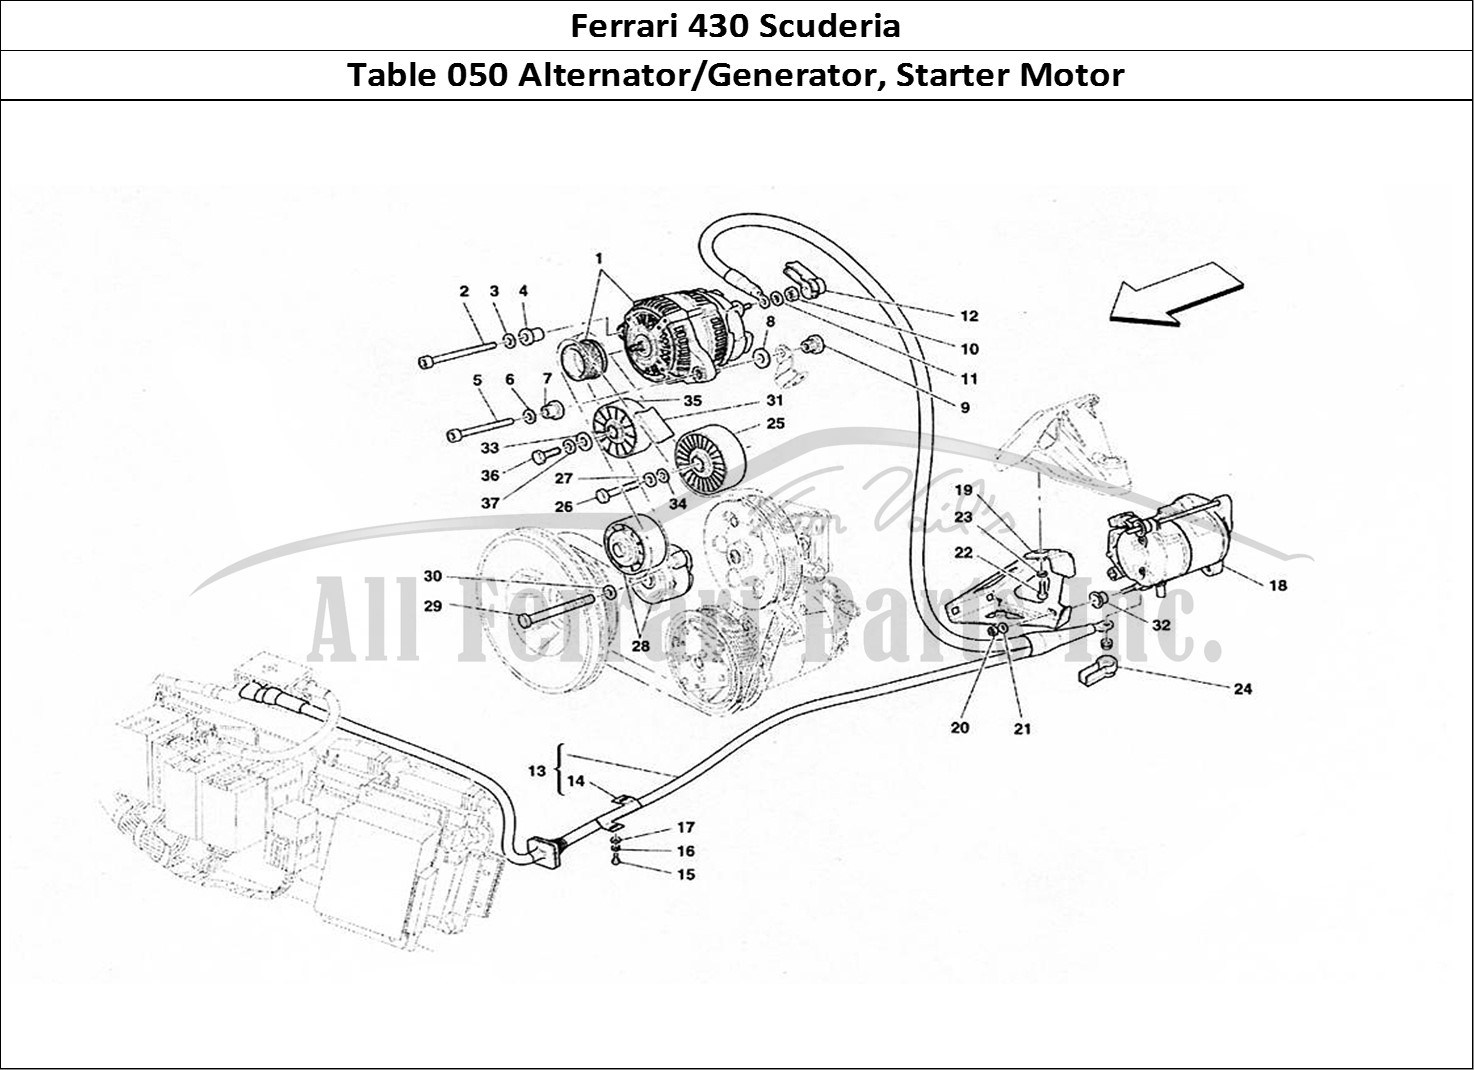 Ferrari Parts Ferrari 430 Scuderia Page 050 Current Generator - Start